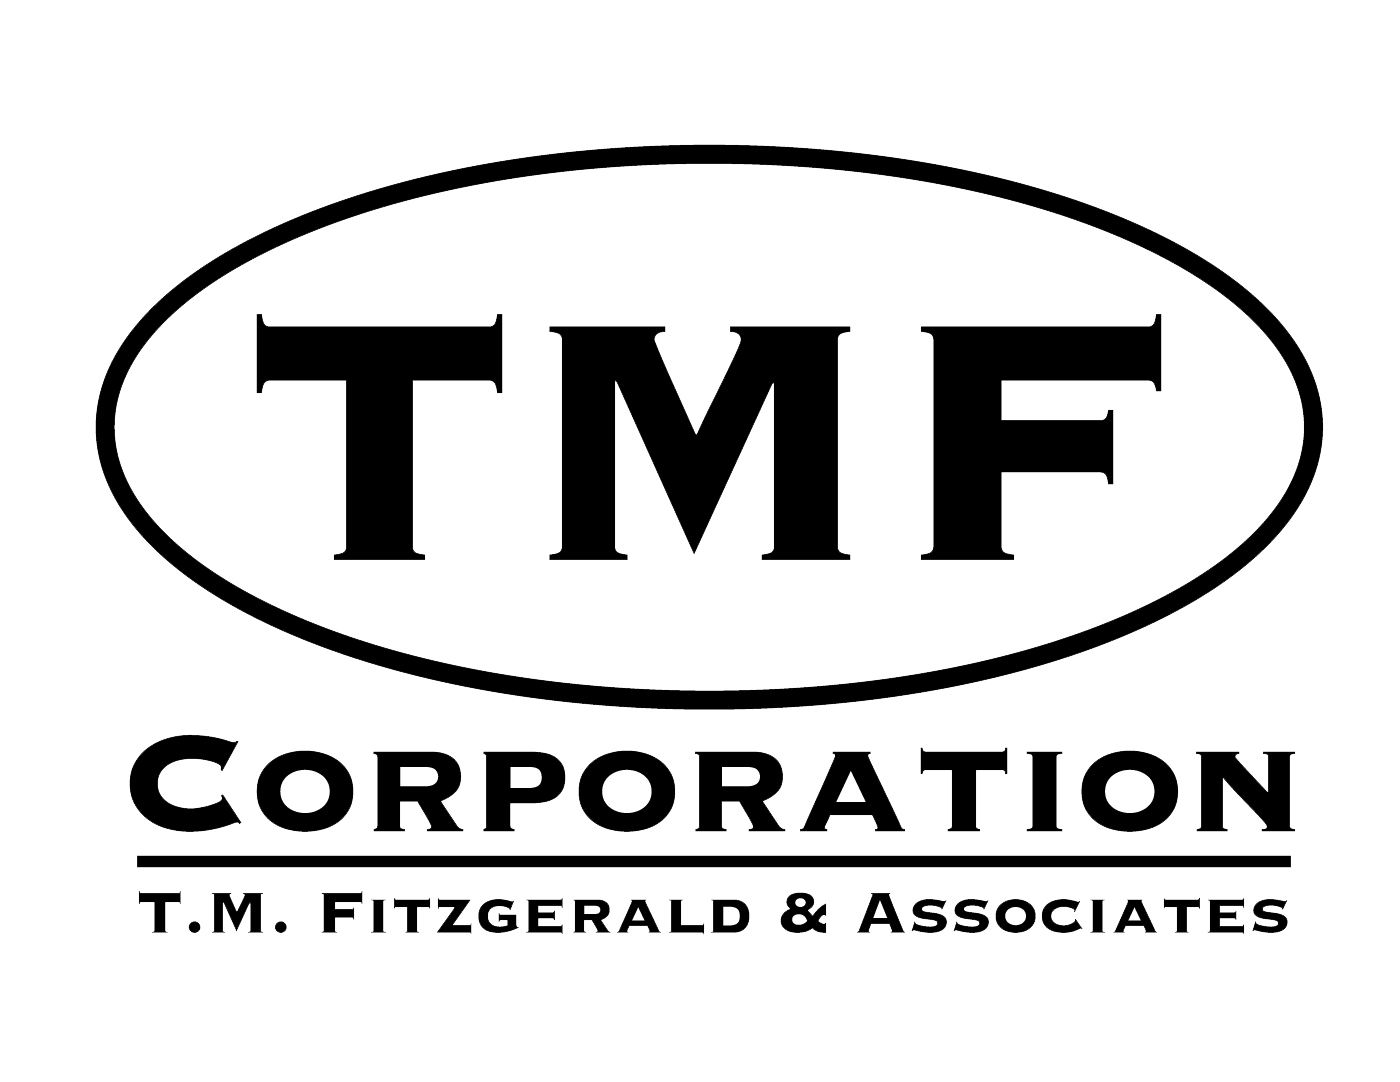 TM Fitzgerald  TMF Corporation